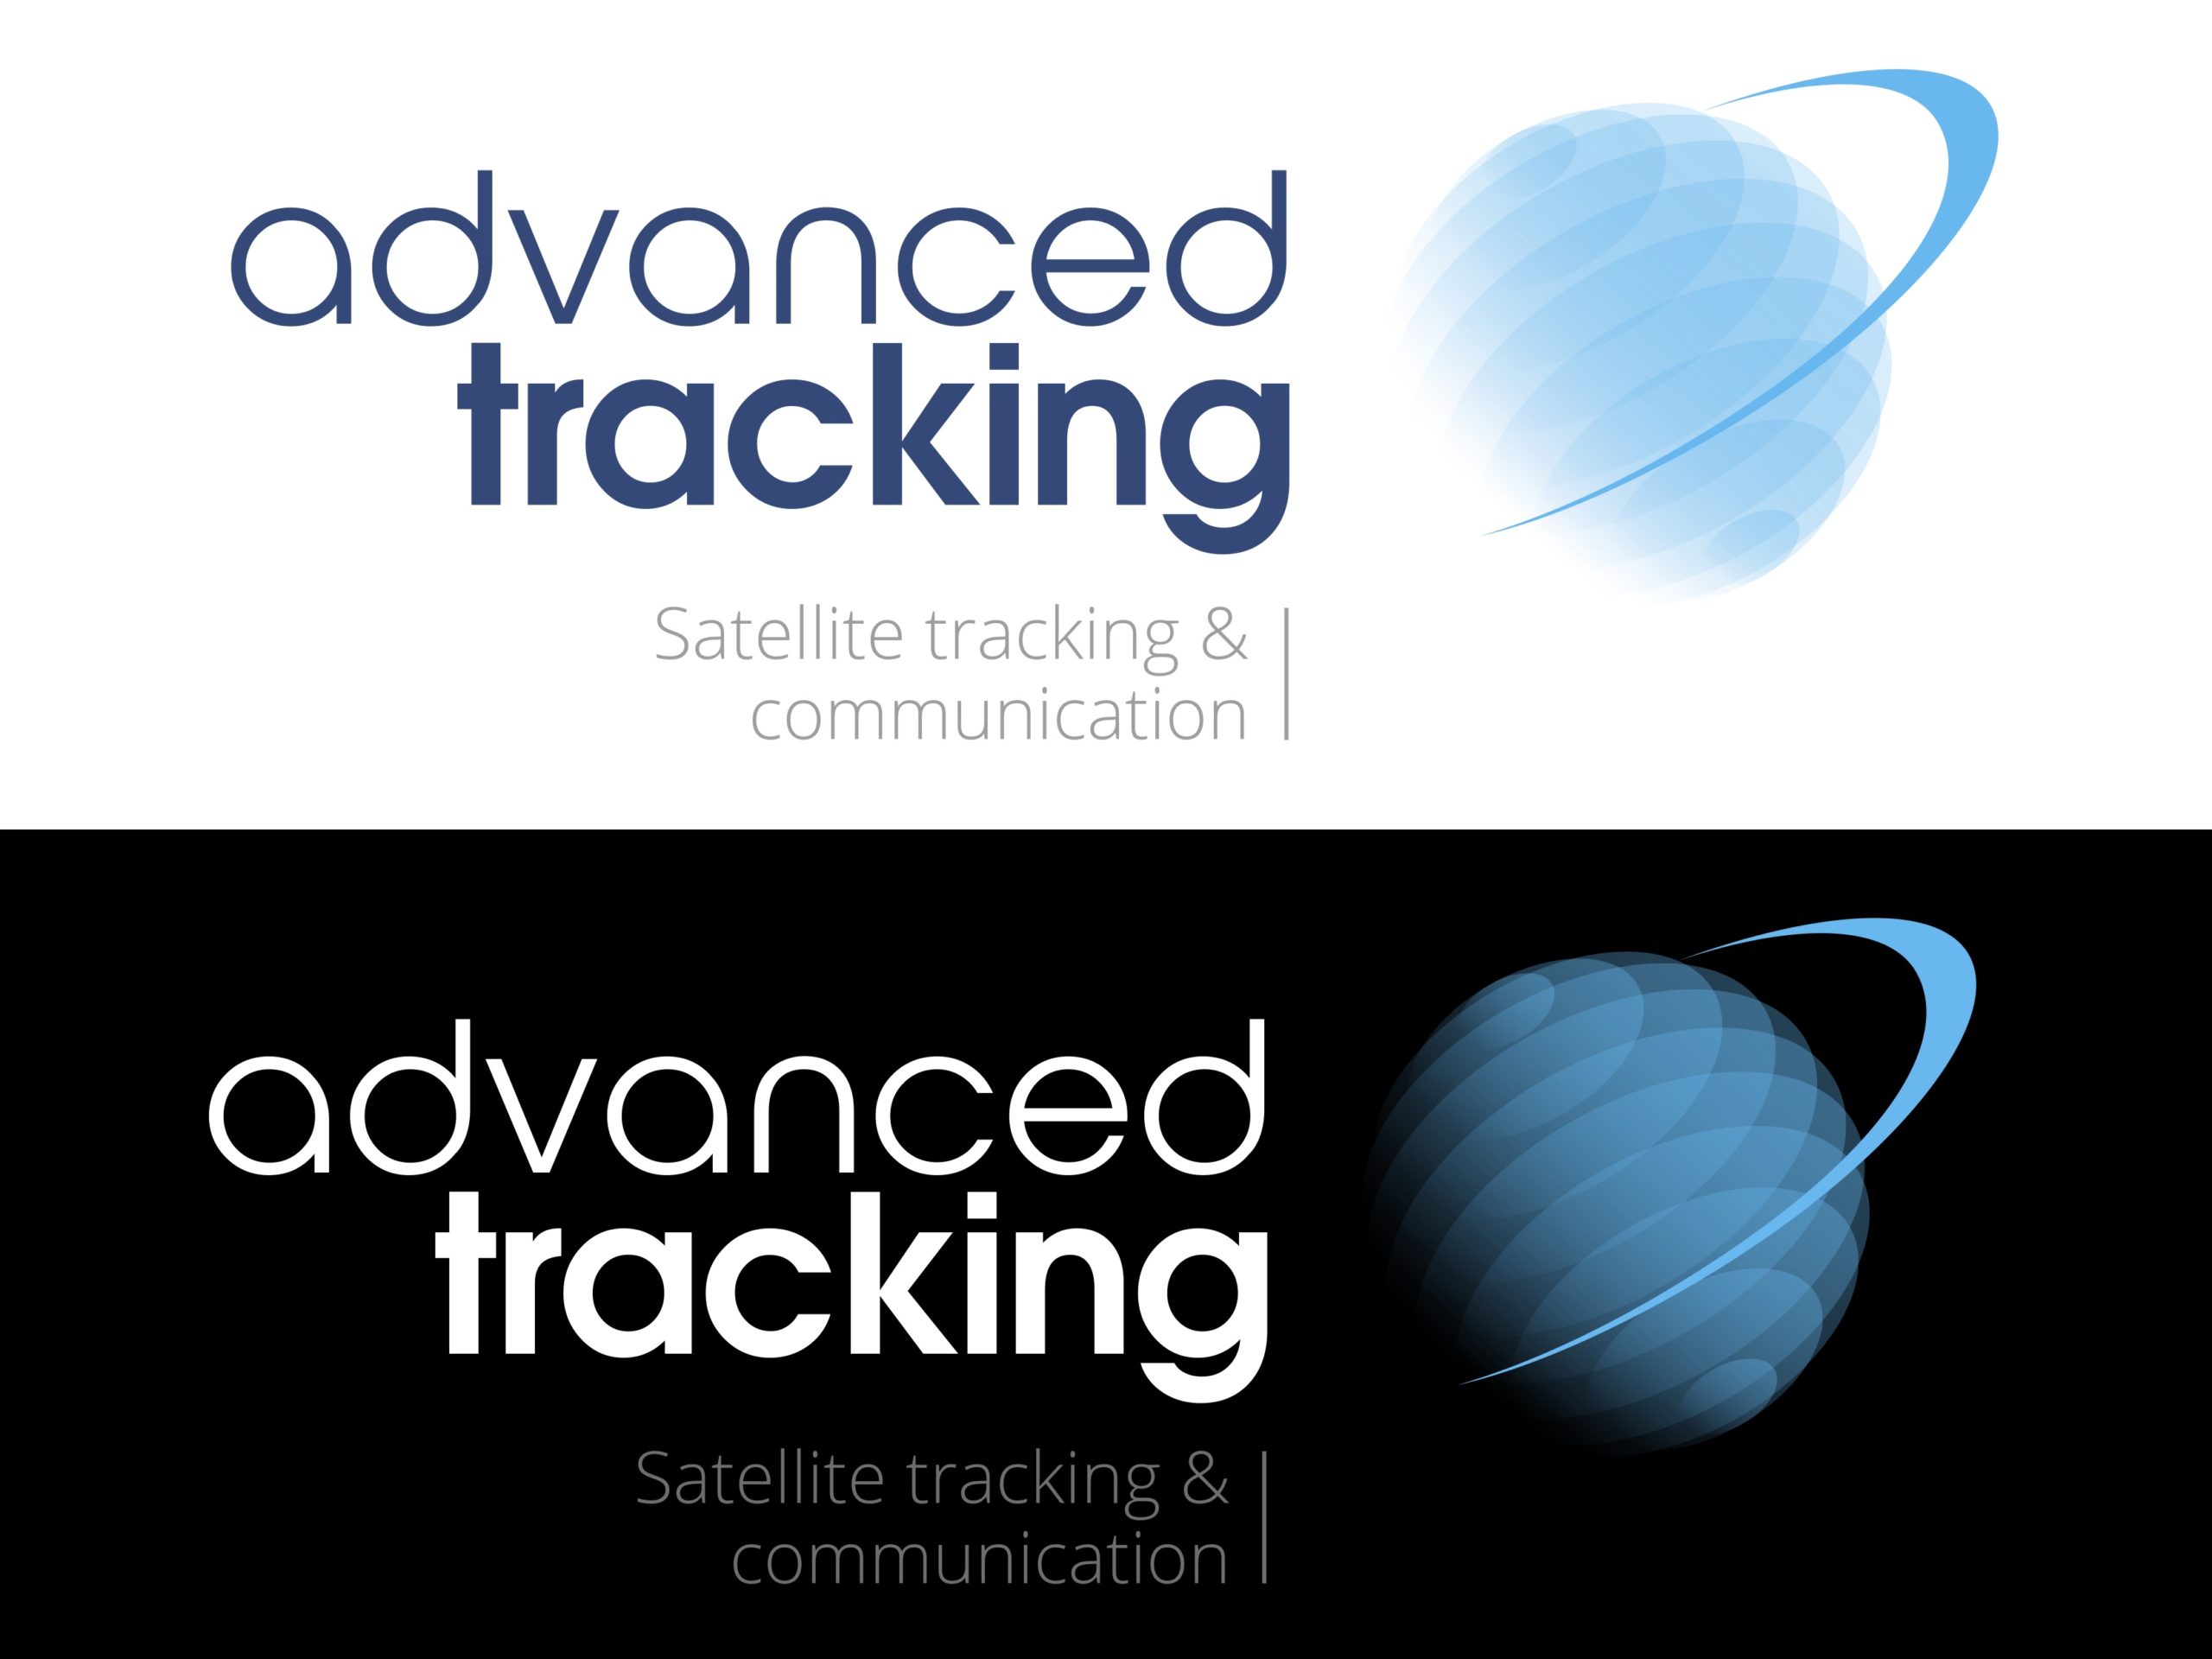 advanced tracking sponsor aidocean